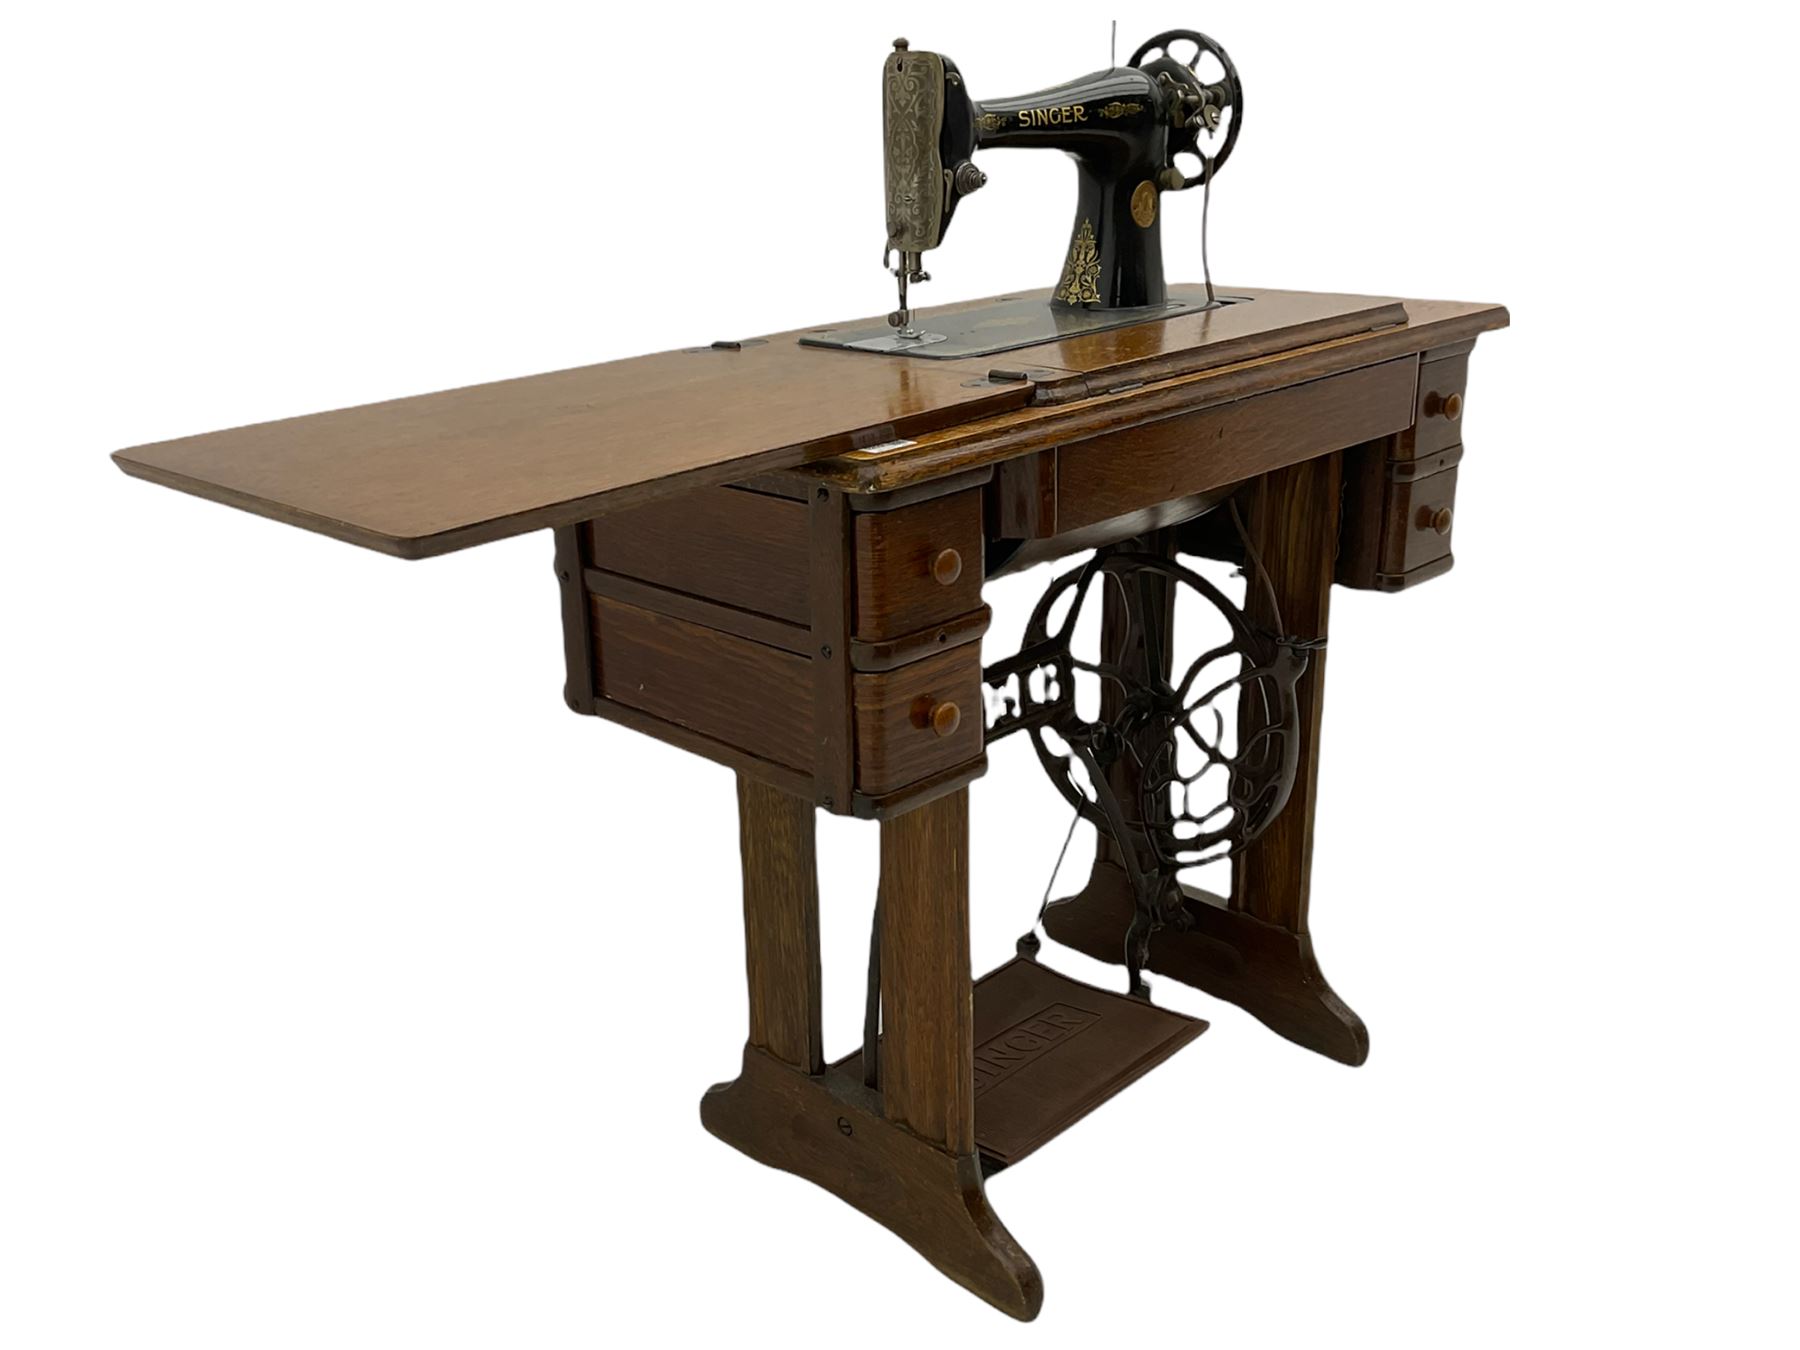 Singer treadle sewing machine - Image 4 of 12